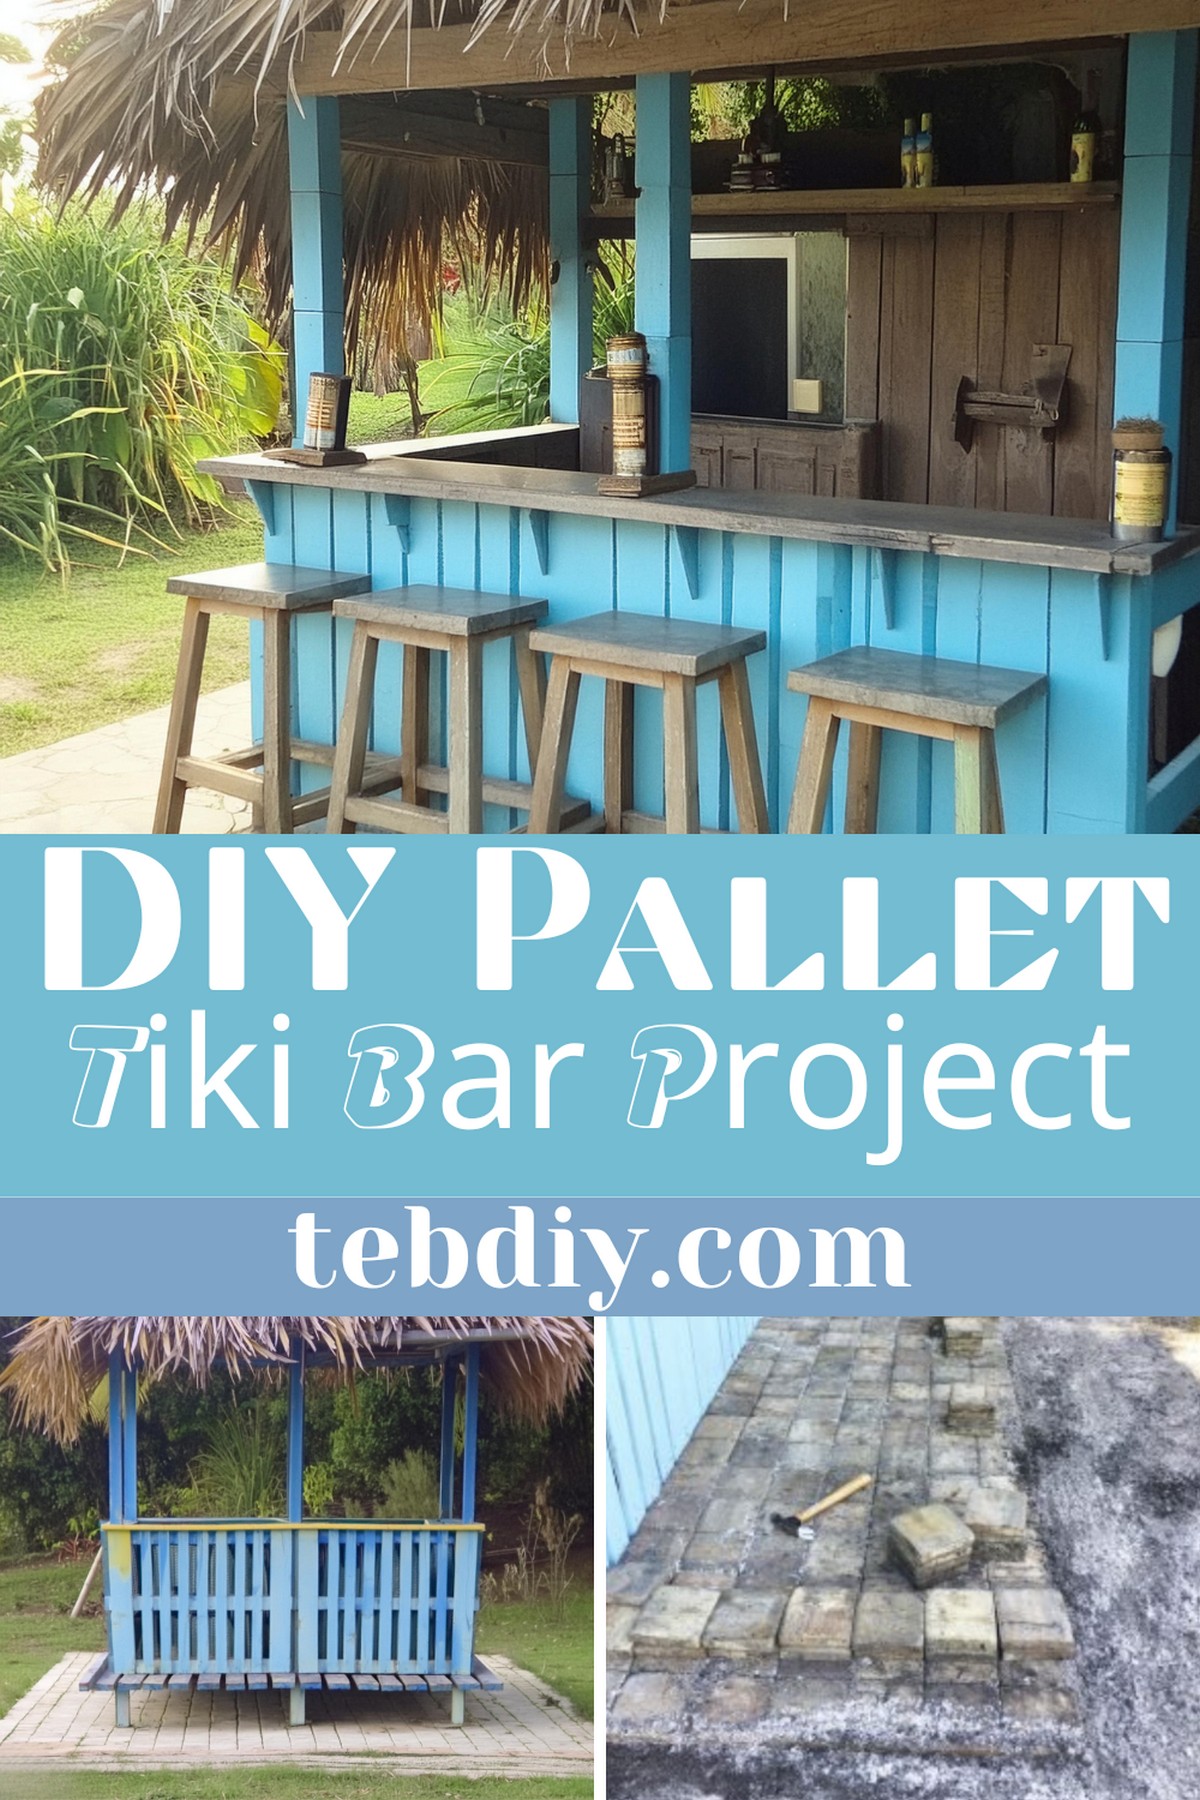 DIY Pallet Tiki Bar Project